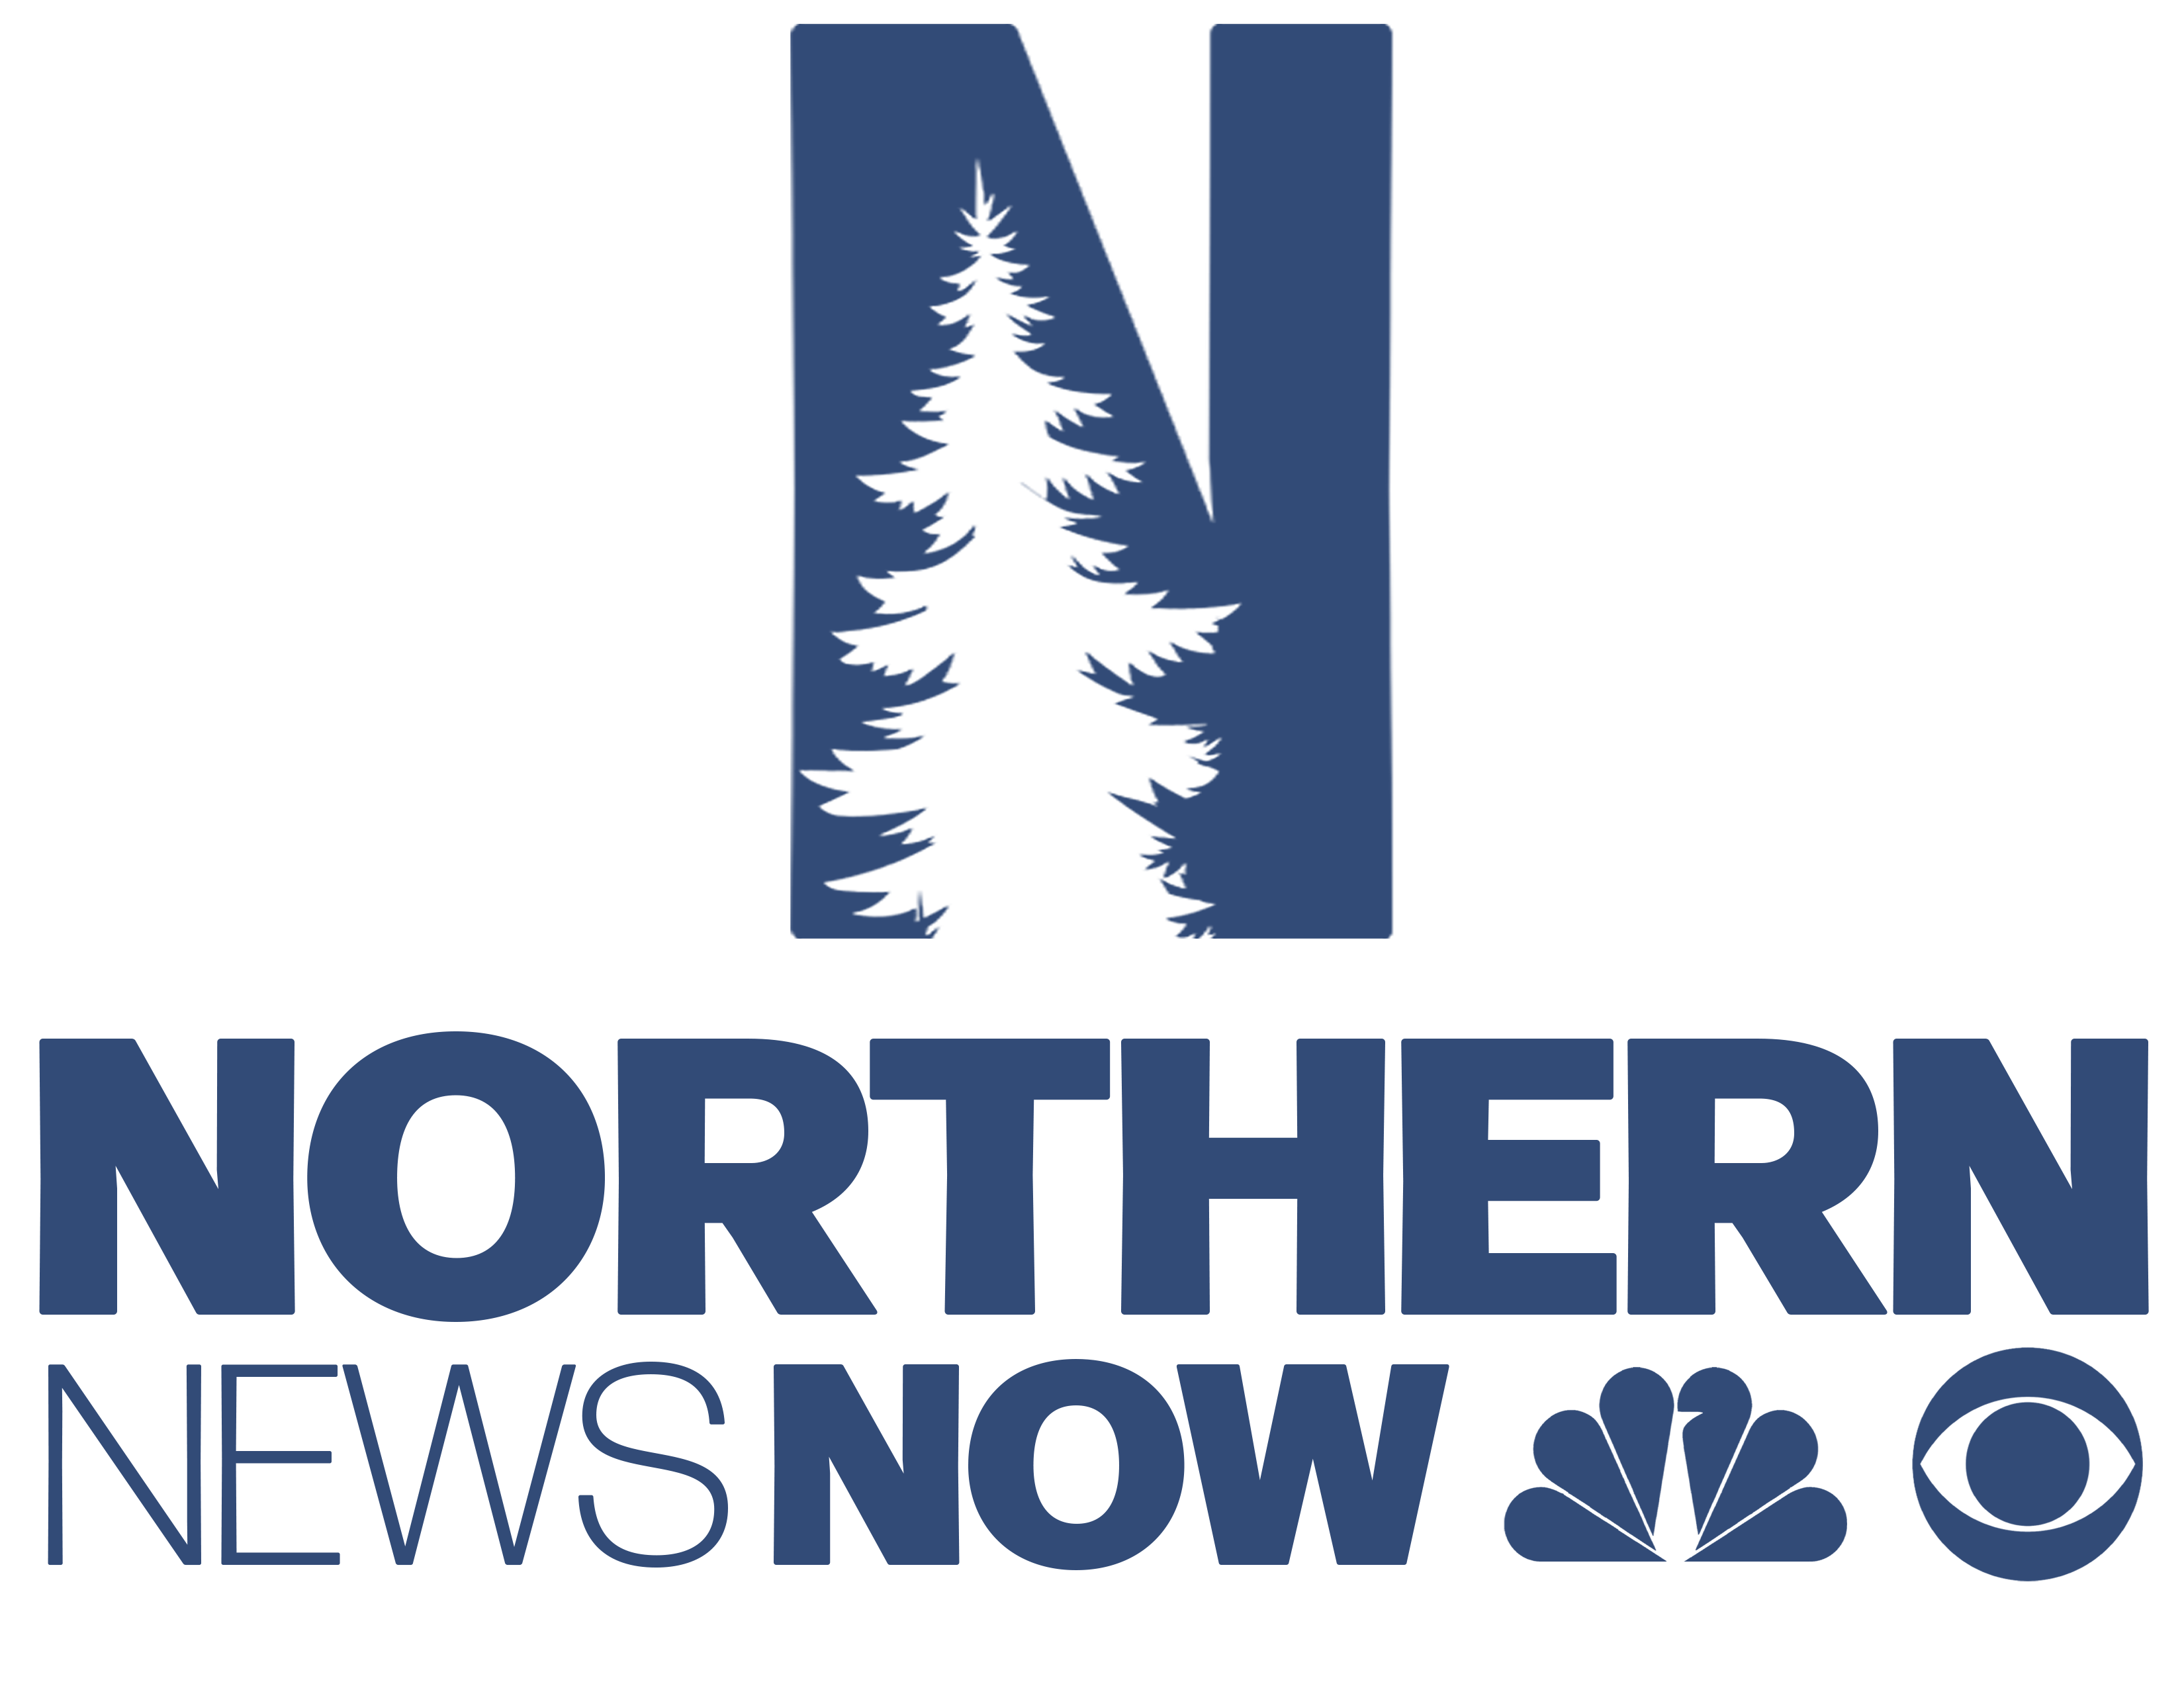 KBJR, Northern News Now